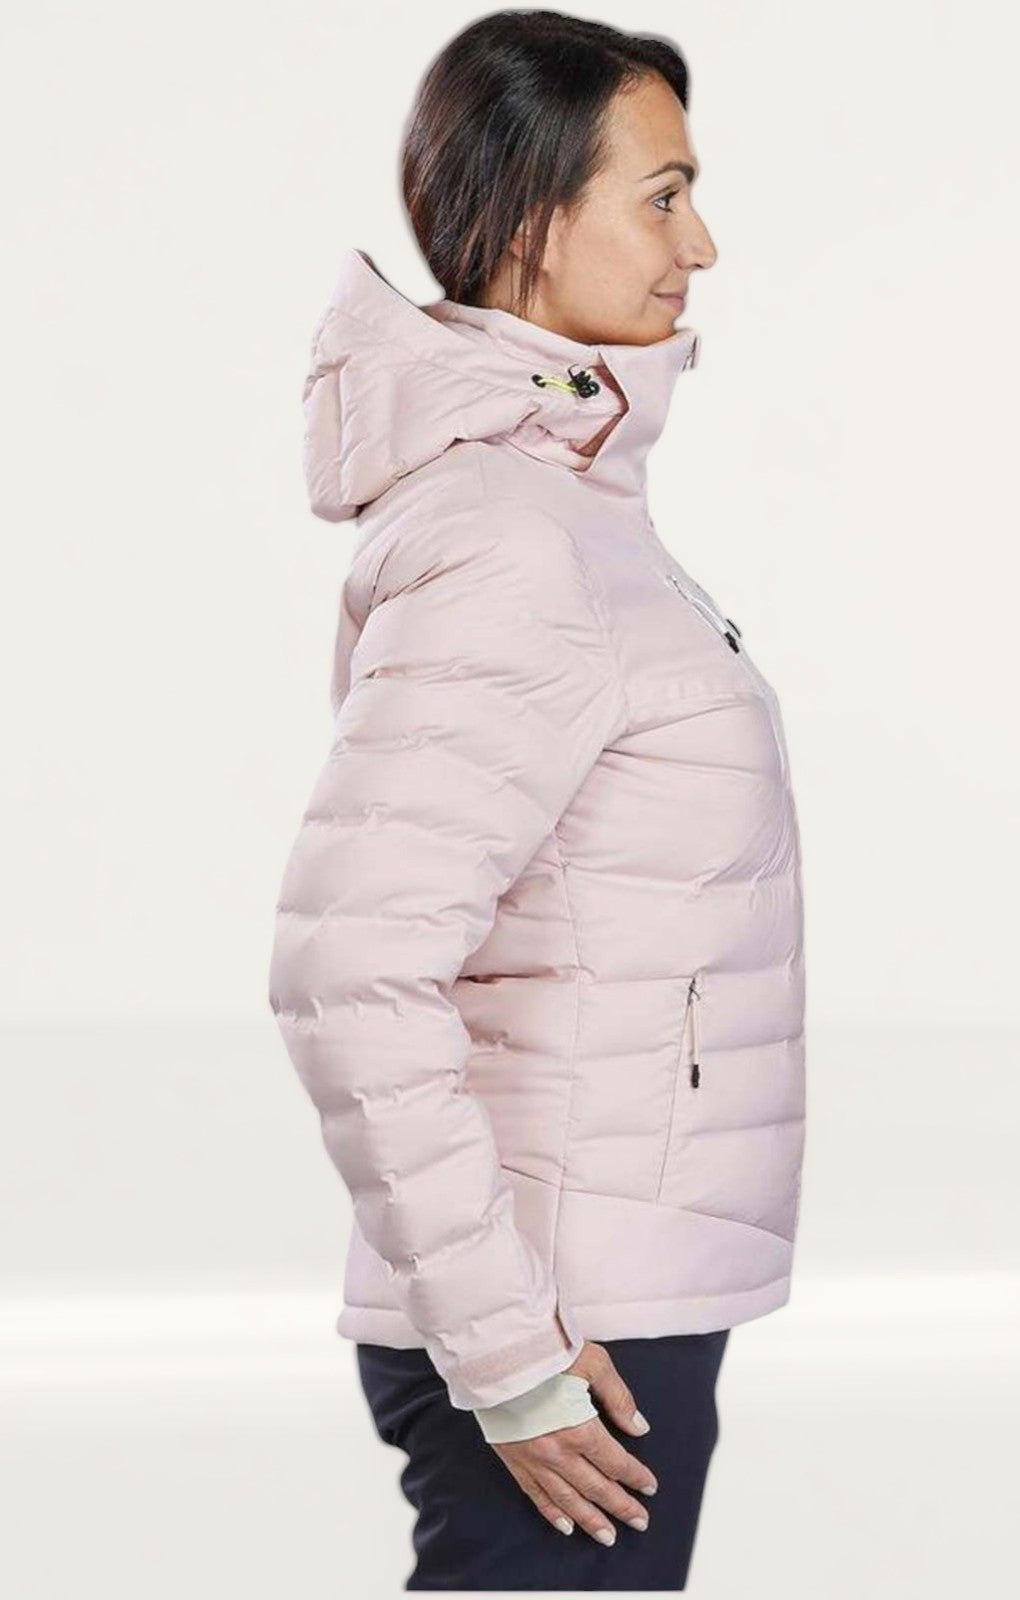 Decathlon Pink Women's Piste Ski Jacket product image